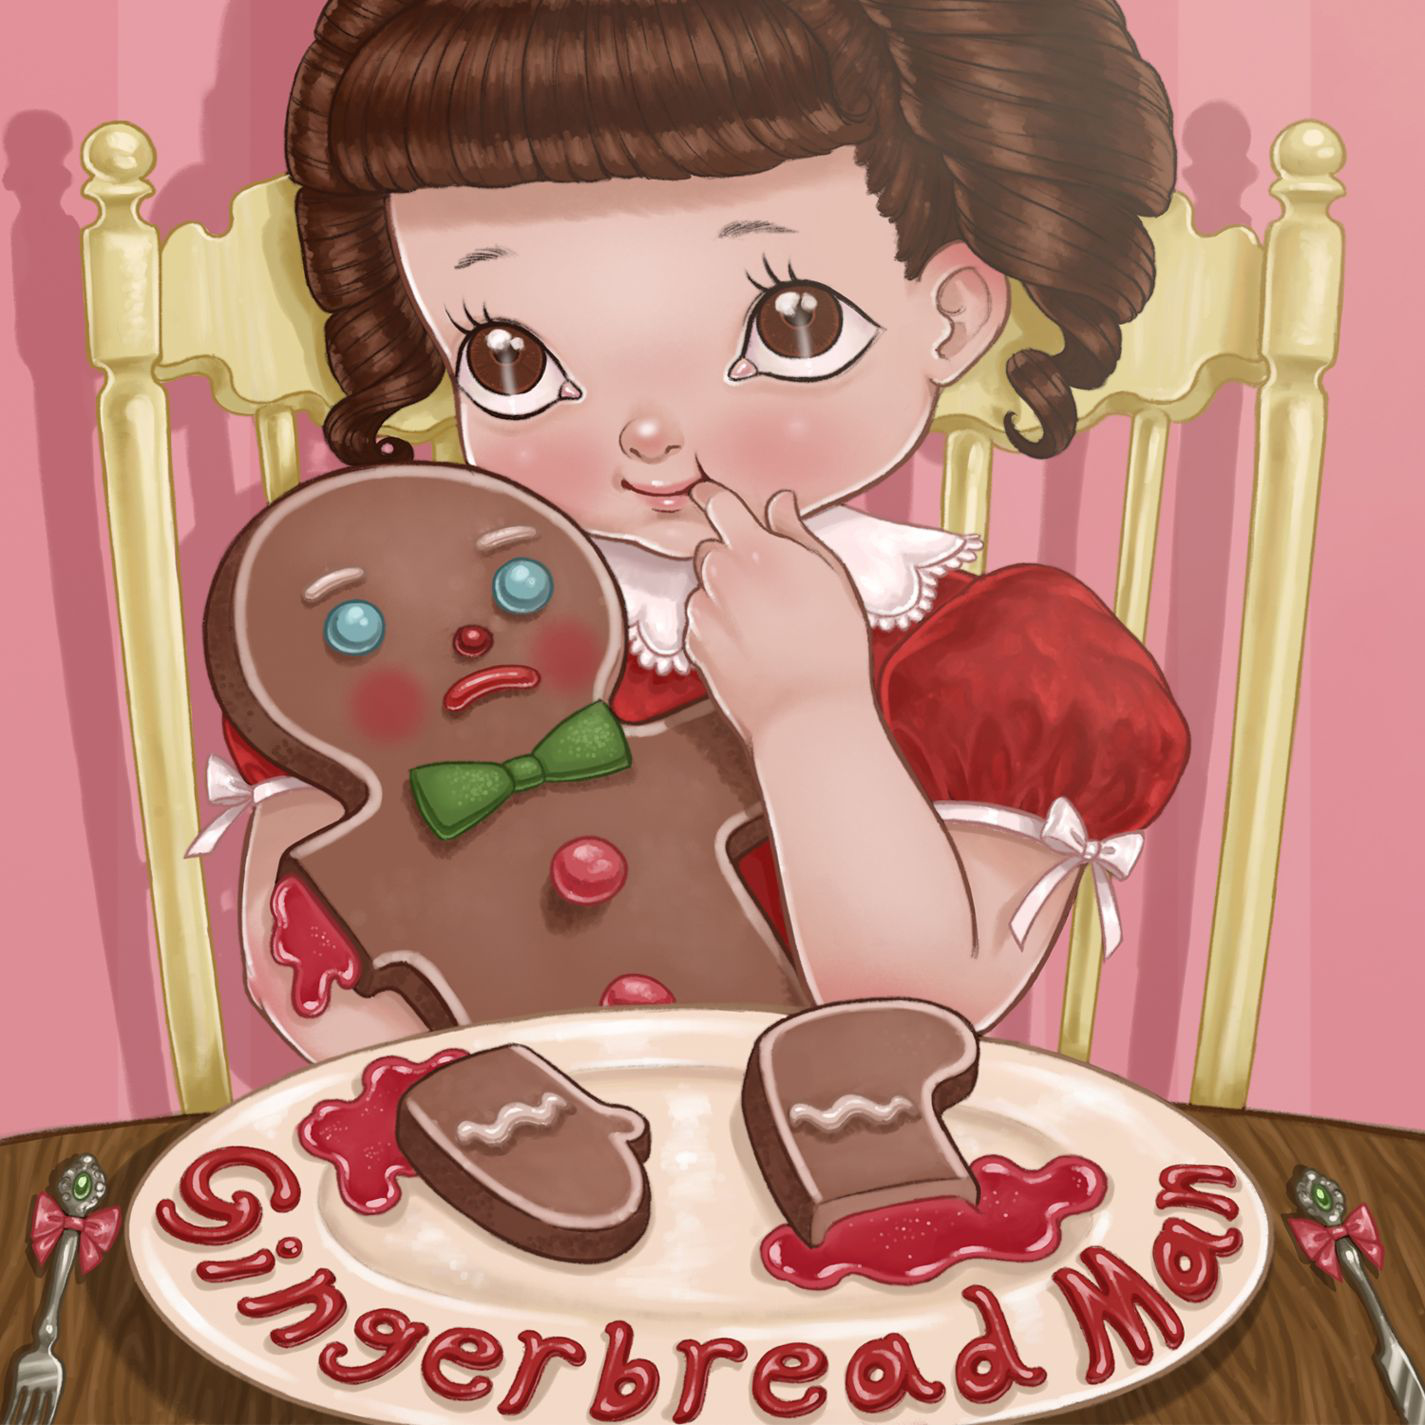 Gingerbread Man Melanie Martinez Wiki Fandom - gingerbread man melanie martinez roblox id